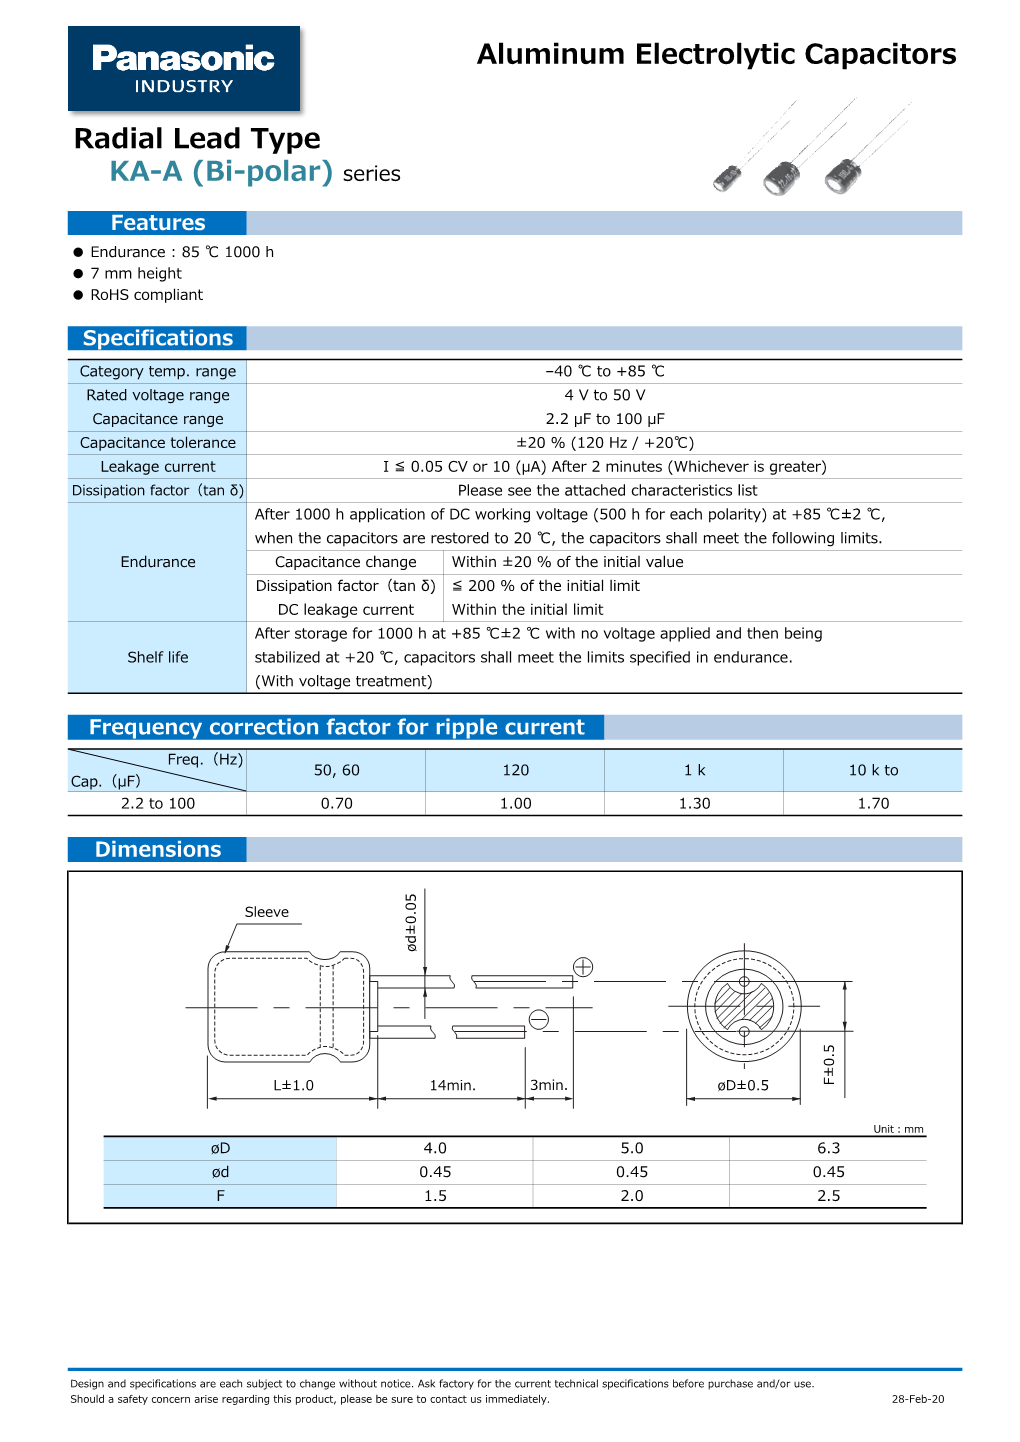 Aluminum Electrolytic Capacitors Radial Lead Type KS-A (Bi-Polar